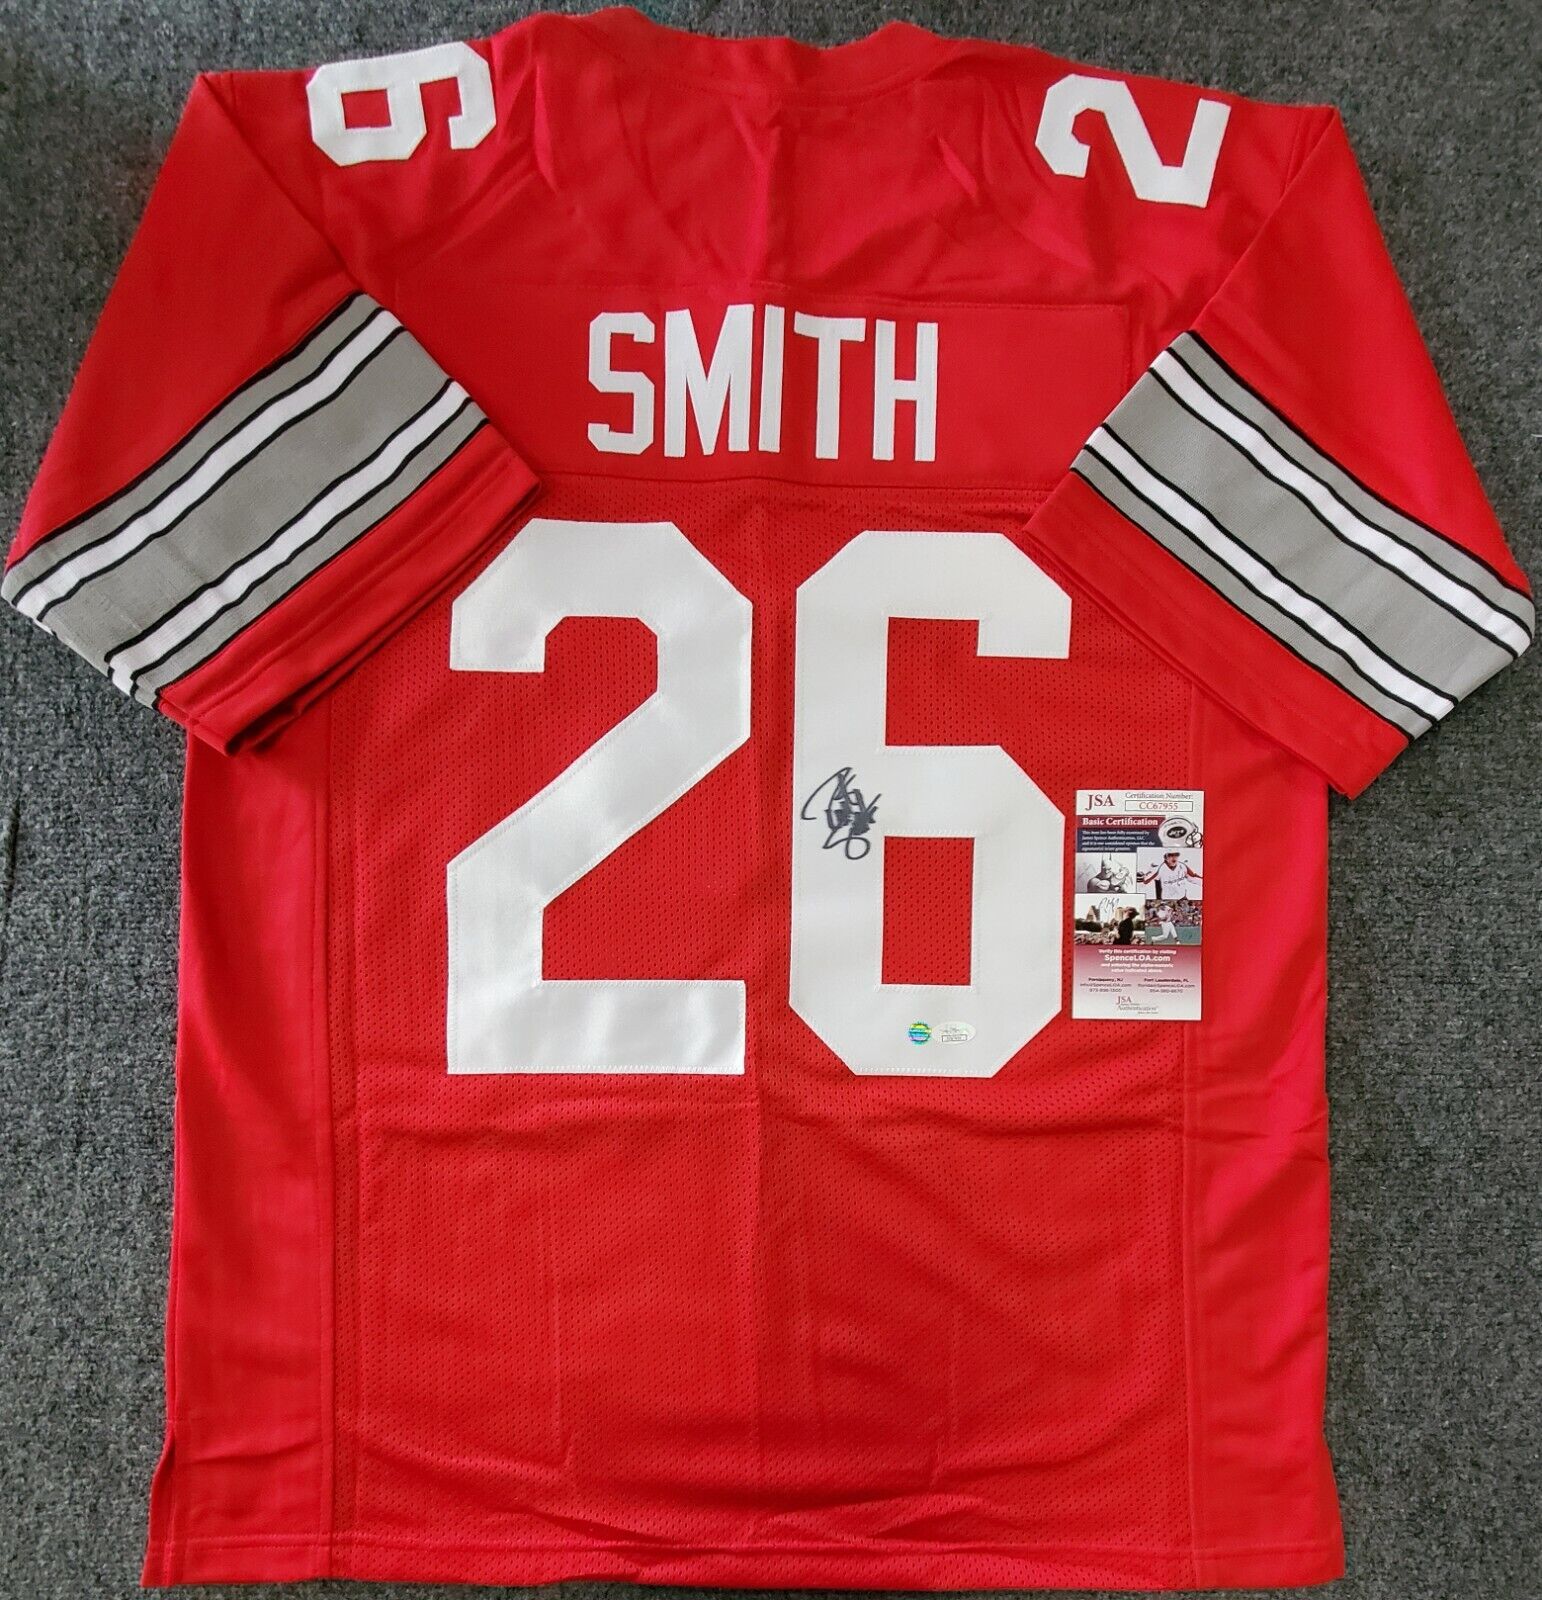 MVP Authentics Ohio State Buckeyes Robert Smith Autographed Signed Jersey Jsa Coa 116.10 sports jersey framing , jersey framing